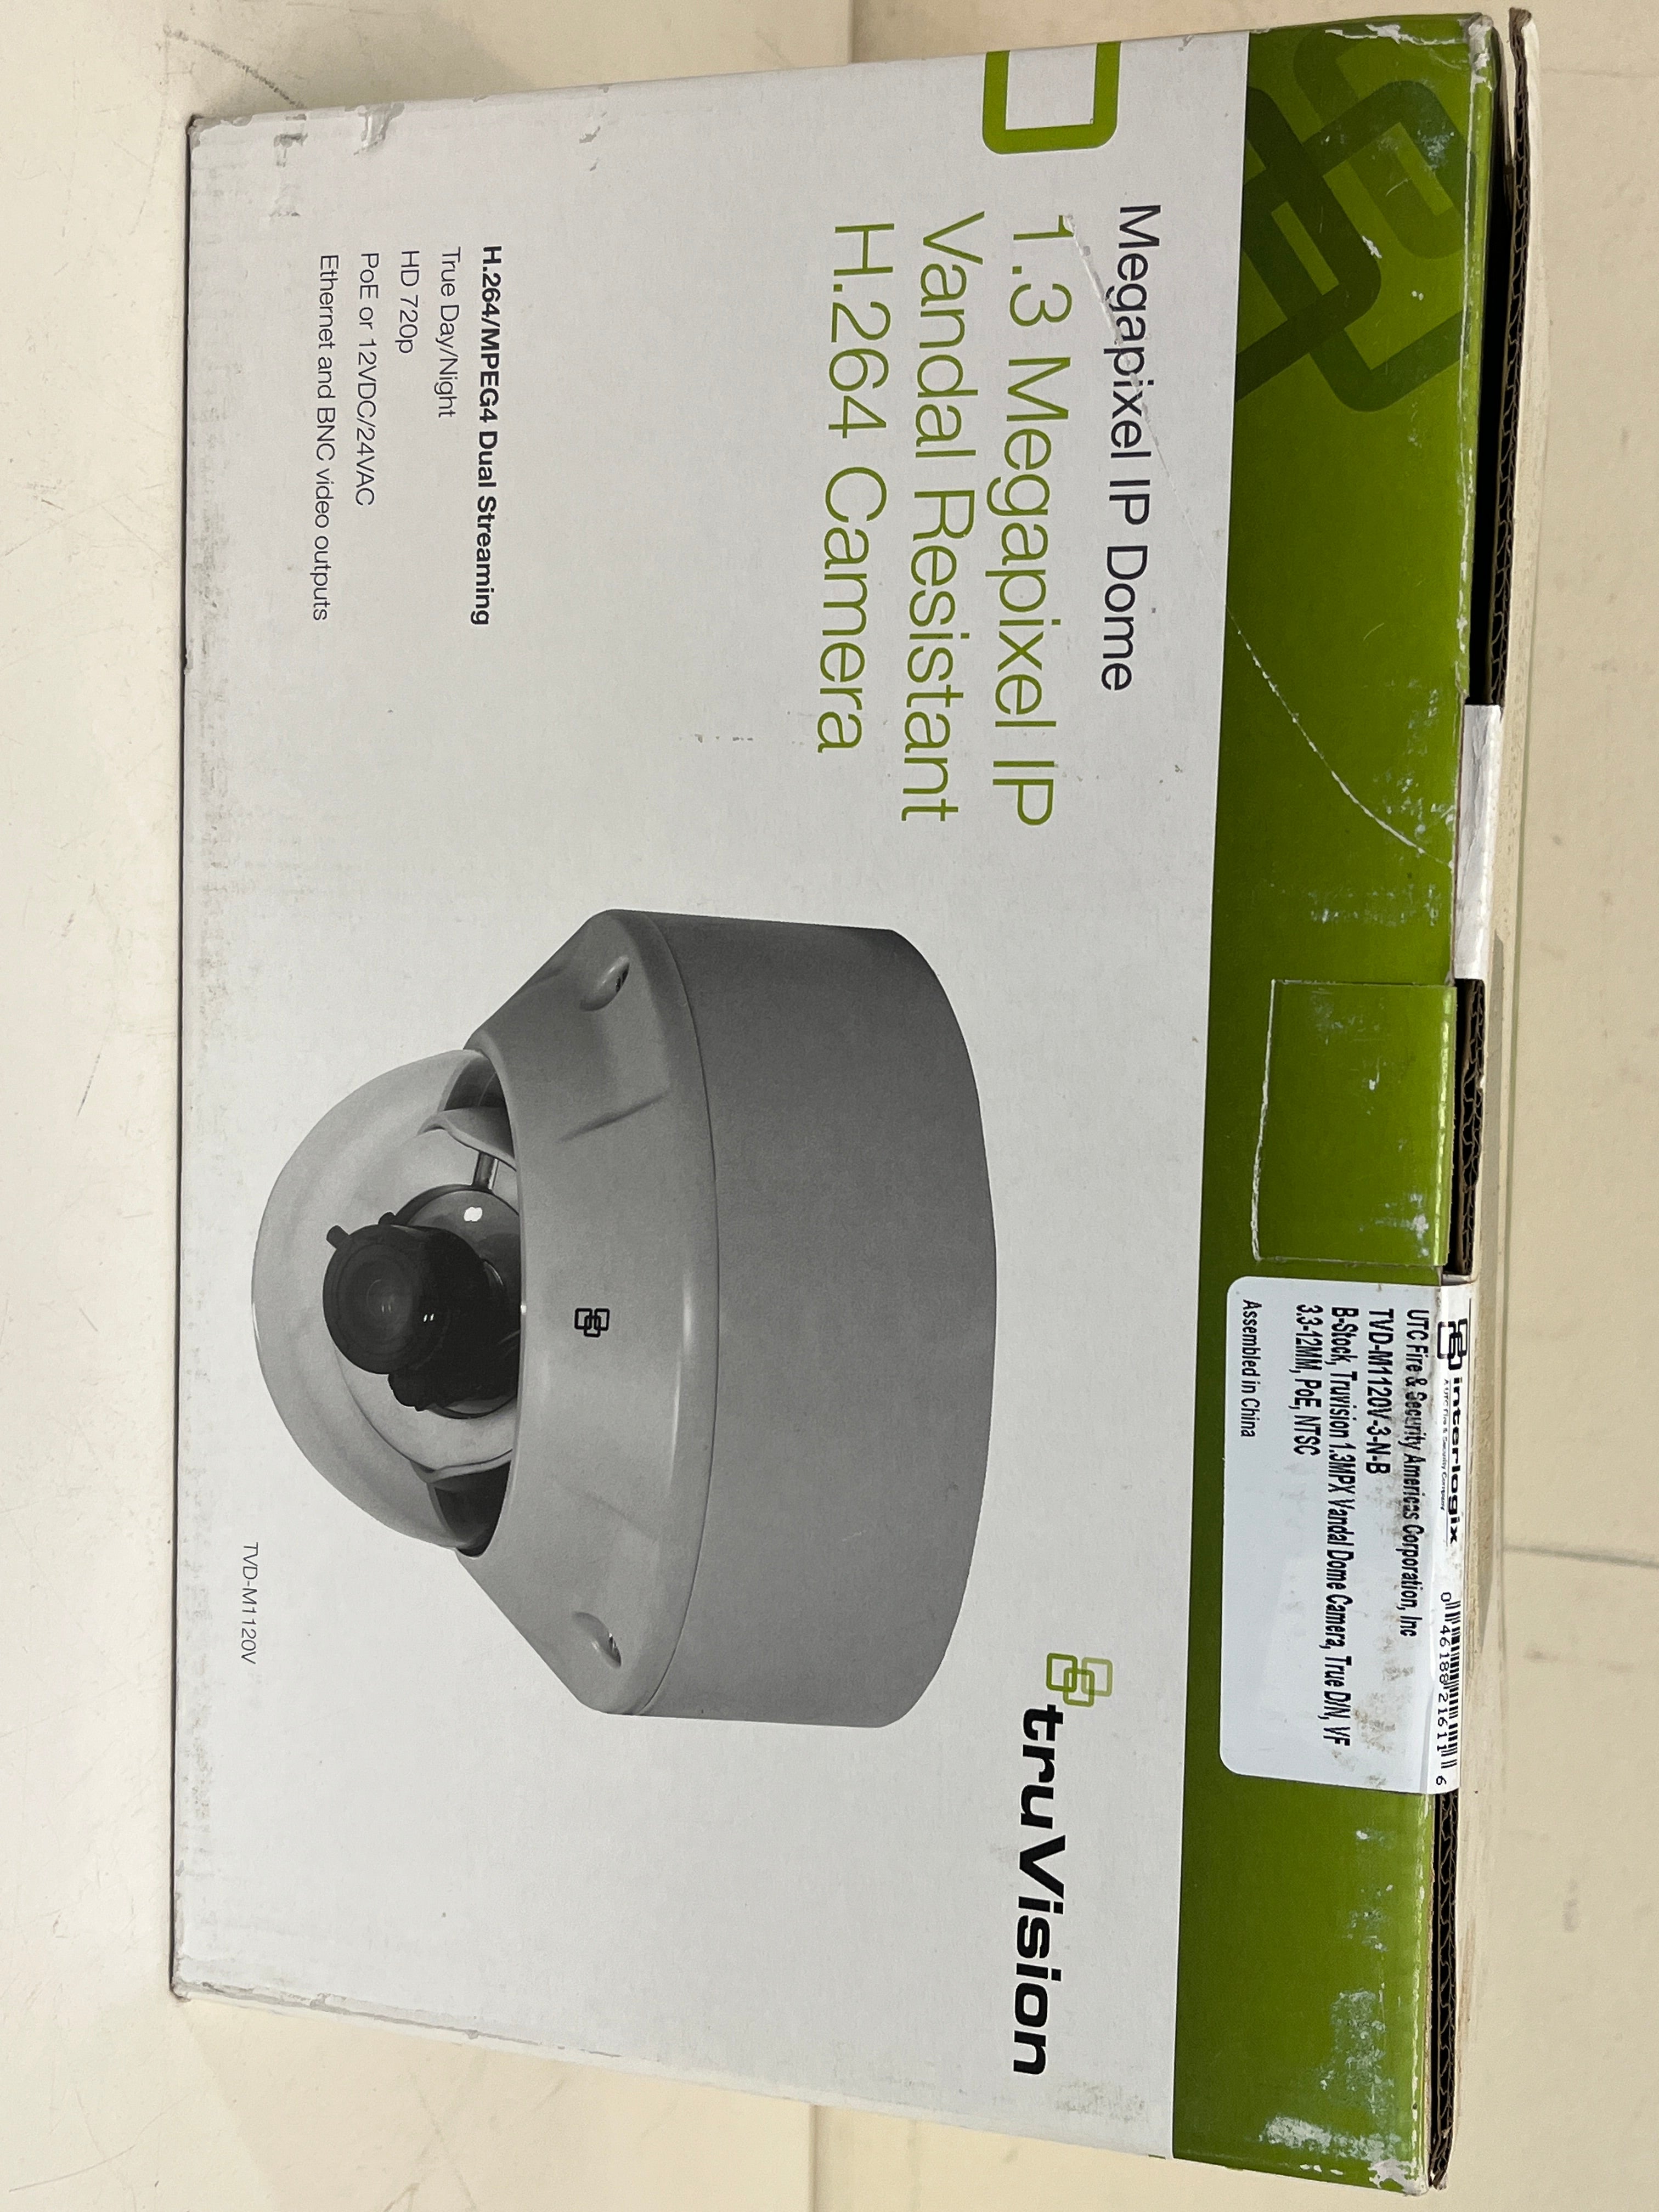 Interlogix truVision 1.3MP IP Vandal Resistant H.264 Dome Security Camera